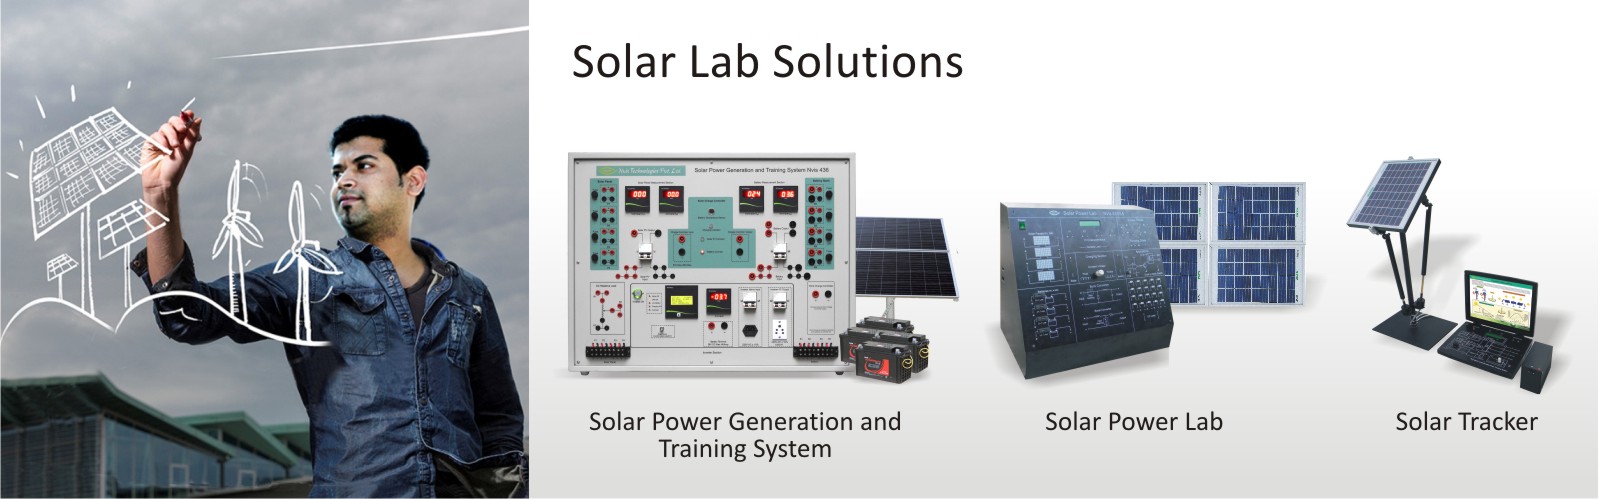 Solar Lab Solutions